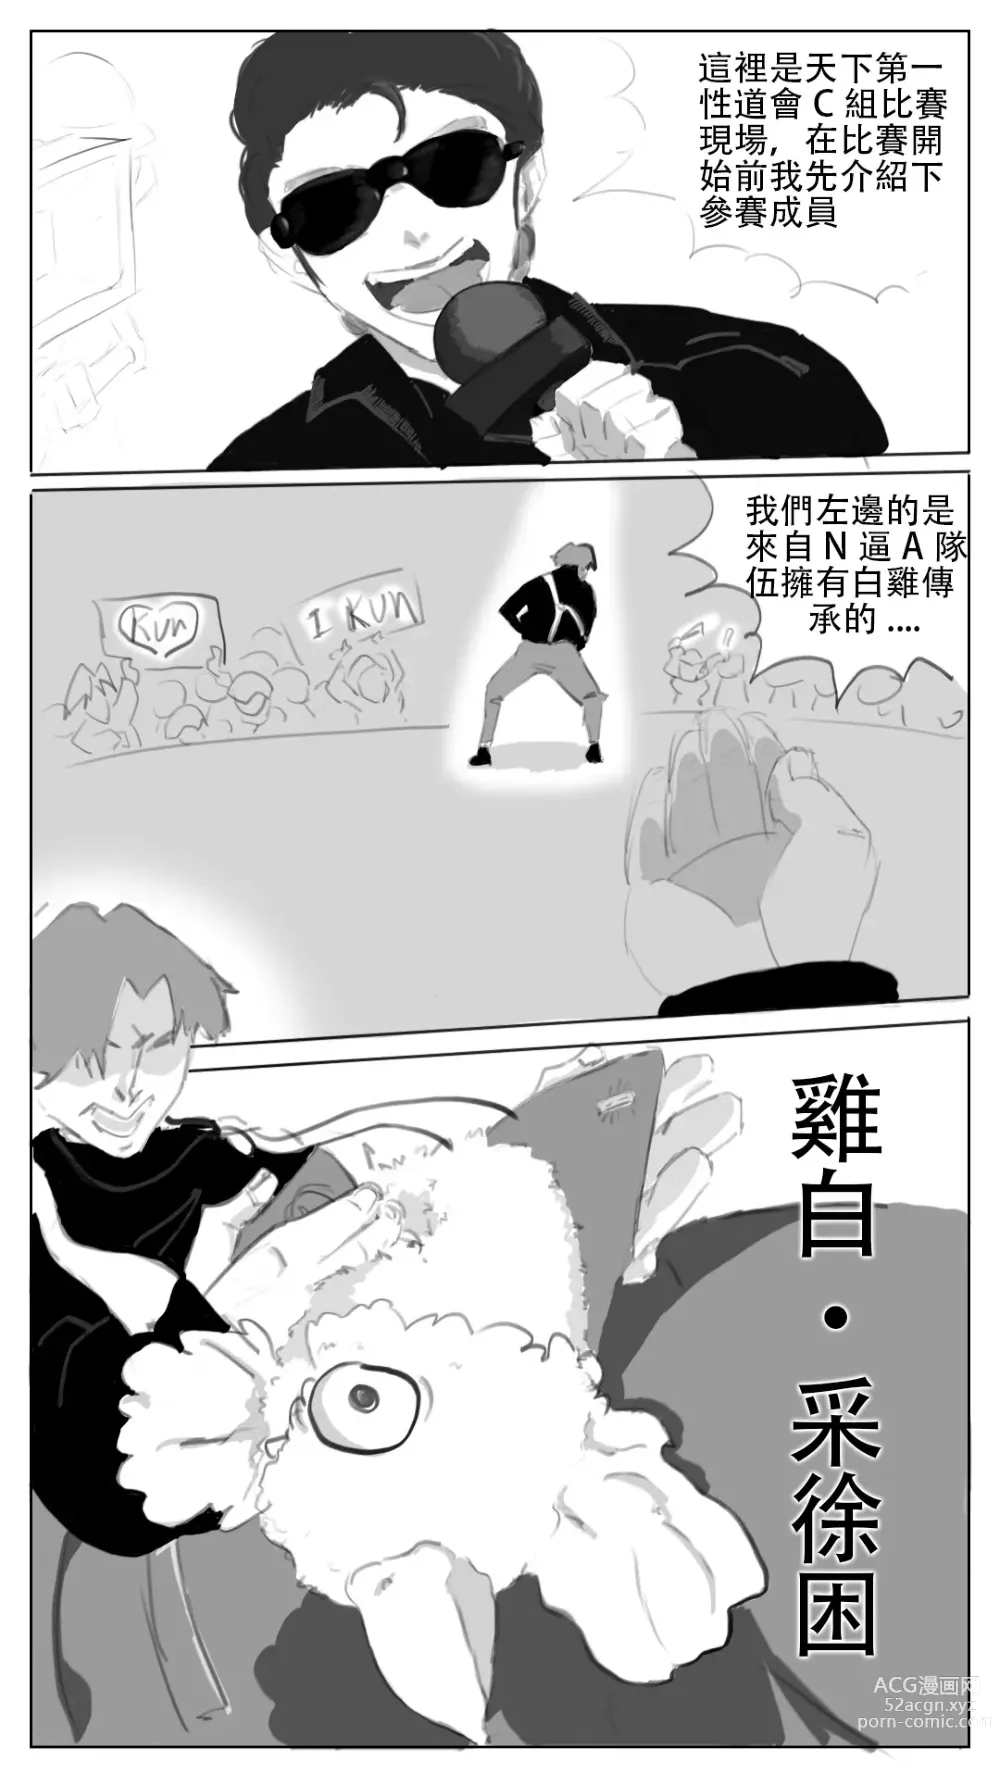 Page 1 of doujinshi 采徐坤大战赖皮蛇